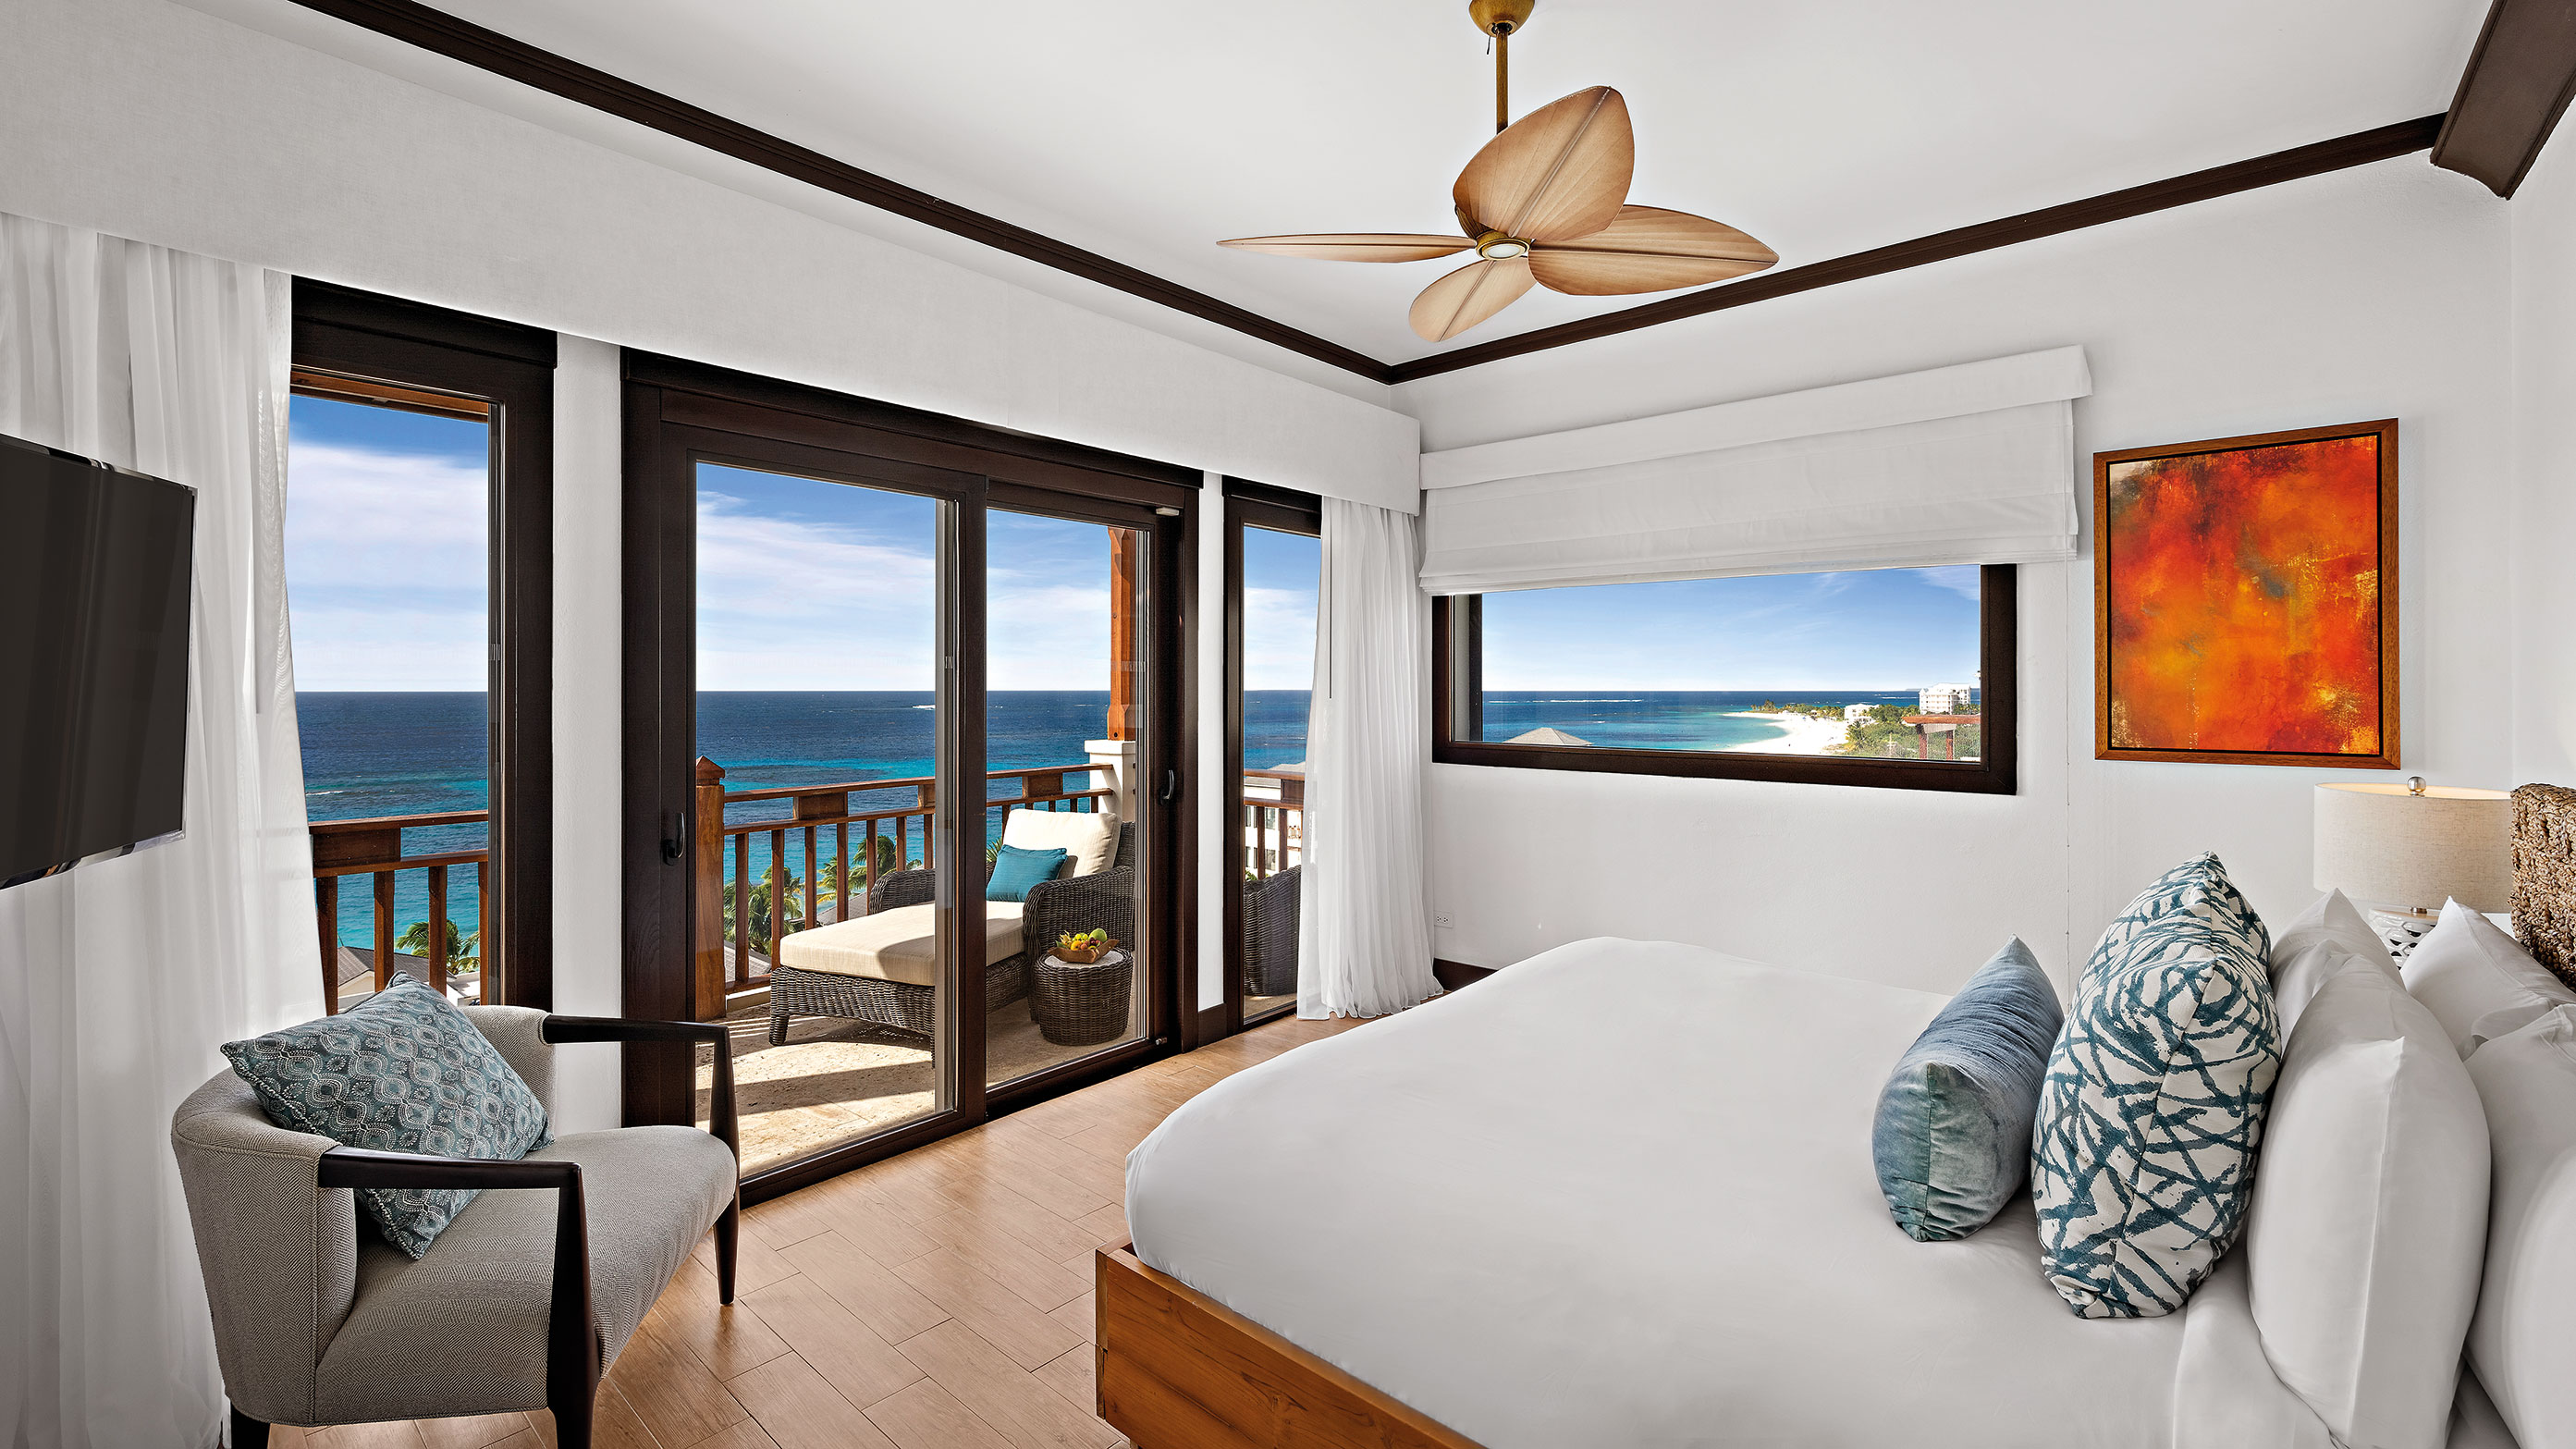 King bed facing balcony window and ocean